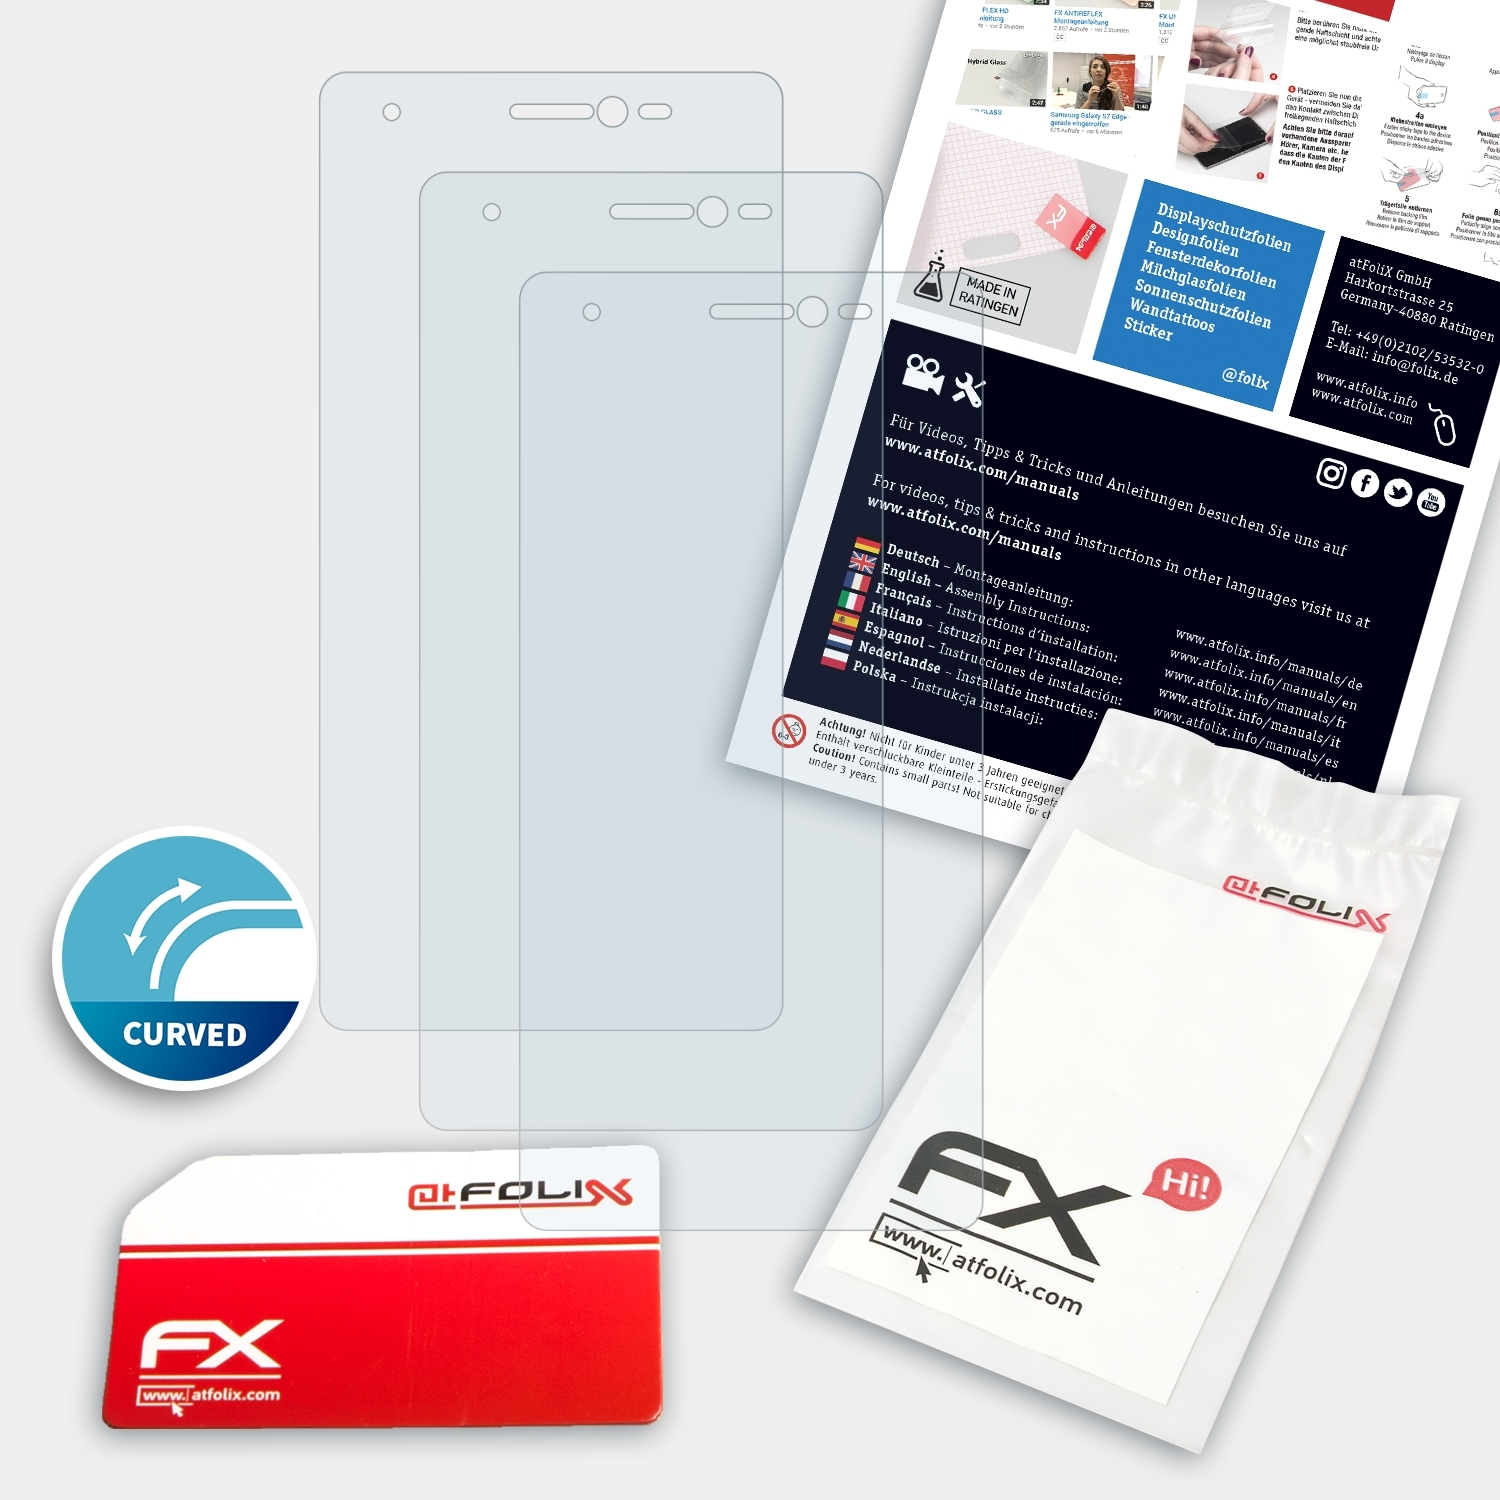 ATFOLIX 3x Nuu Mobile FX-ActiFleX A4L) Displayschutz(für